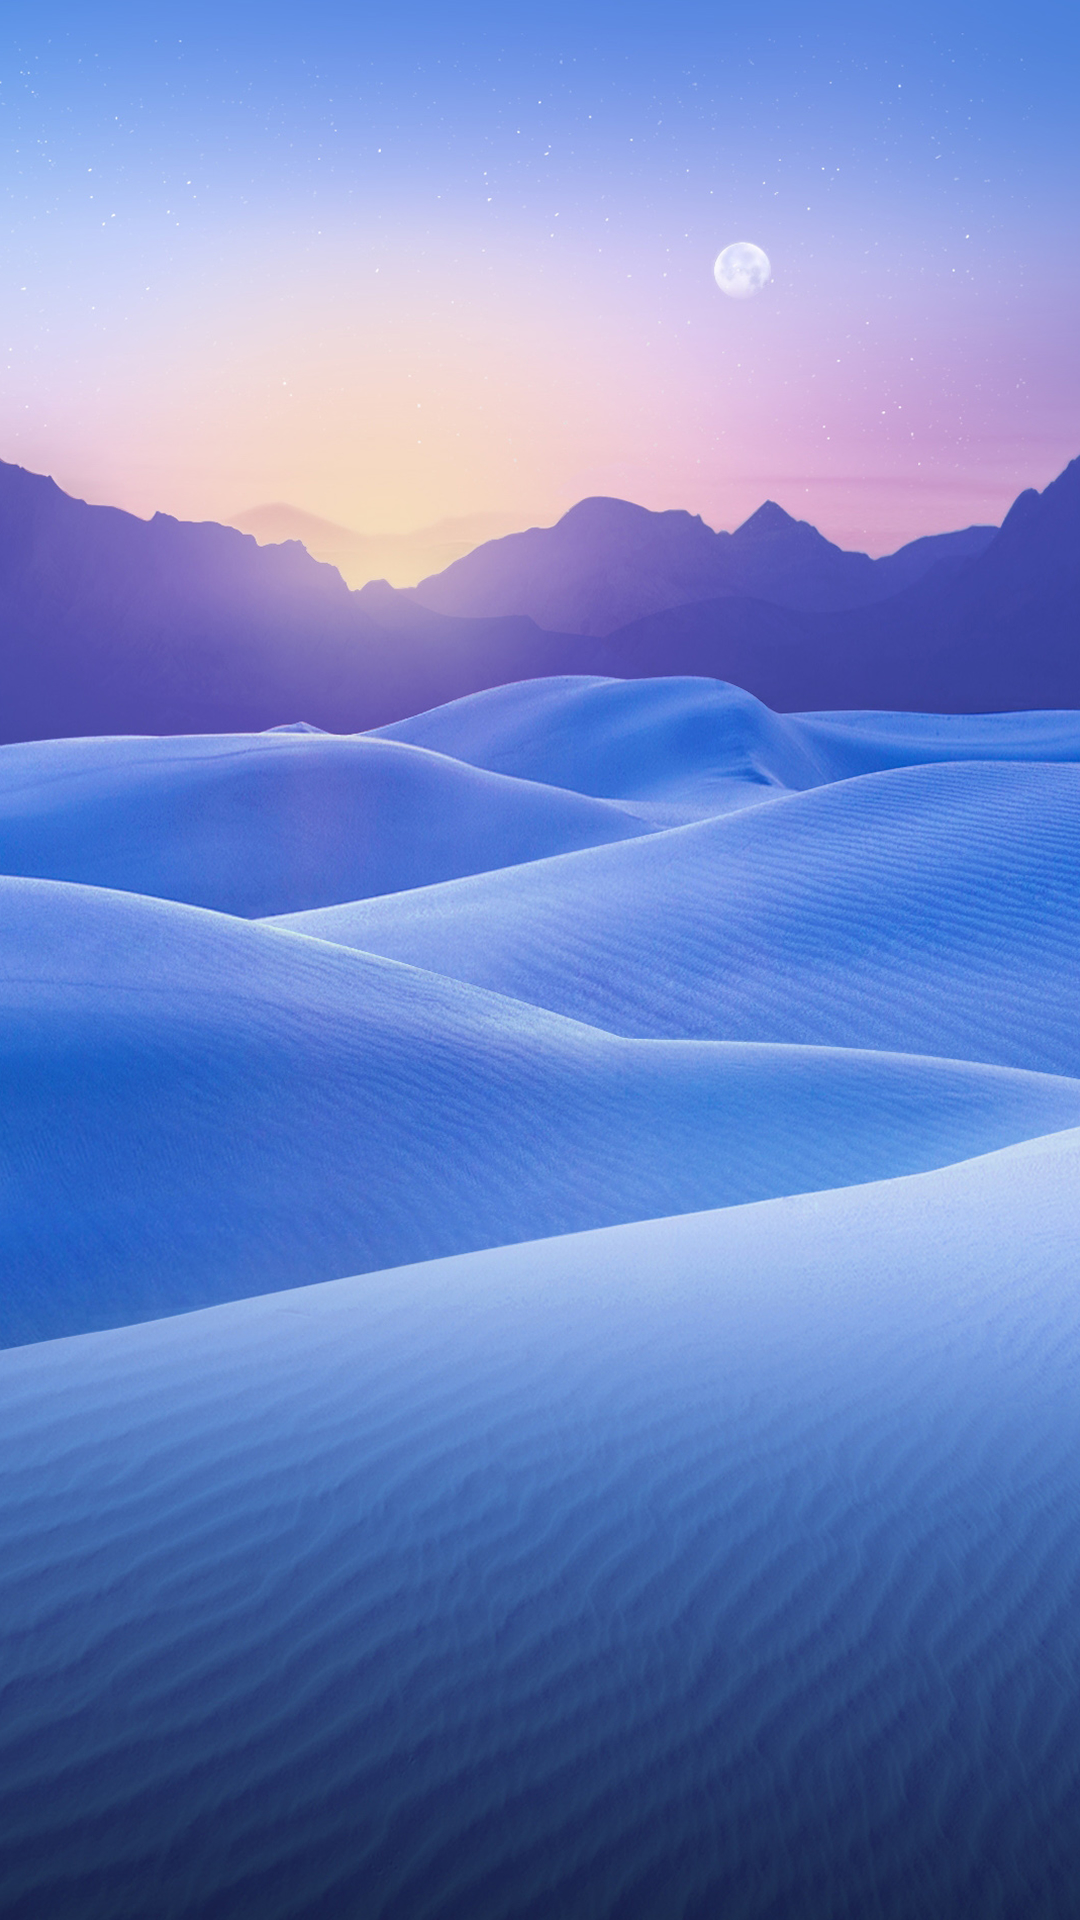 Blue Desert Sunset iPhone 6 Wallpaper Download iPhone Wallpapers